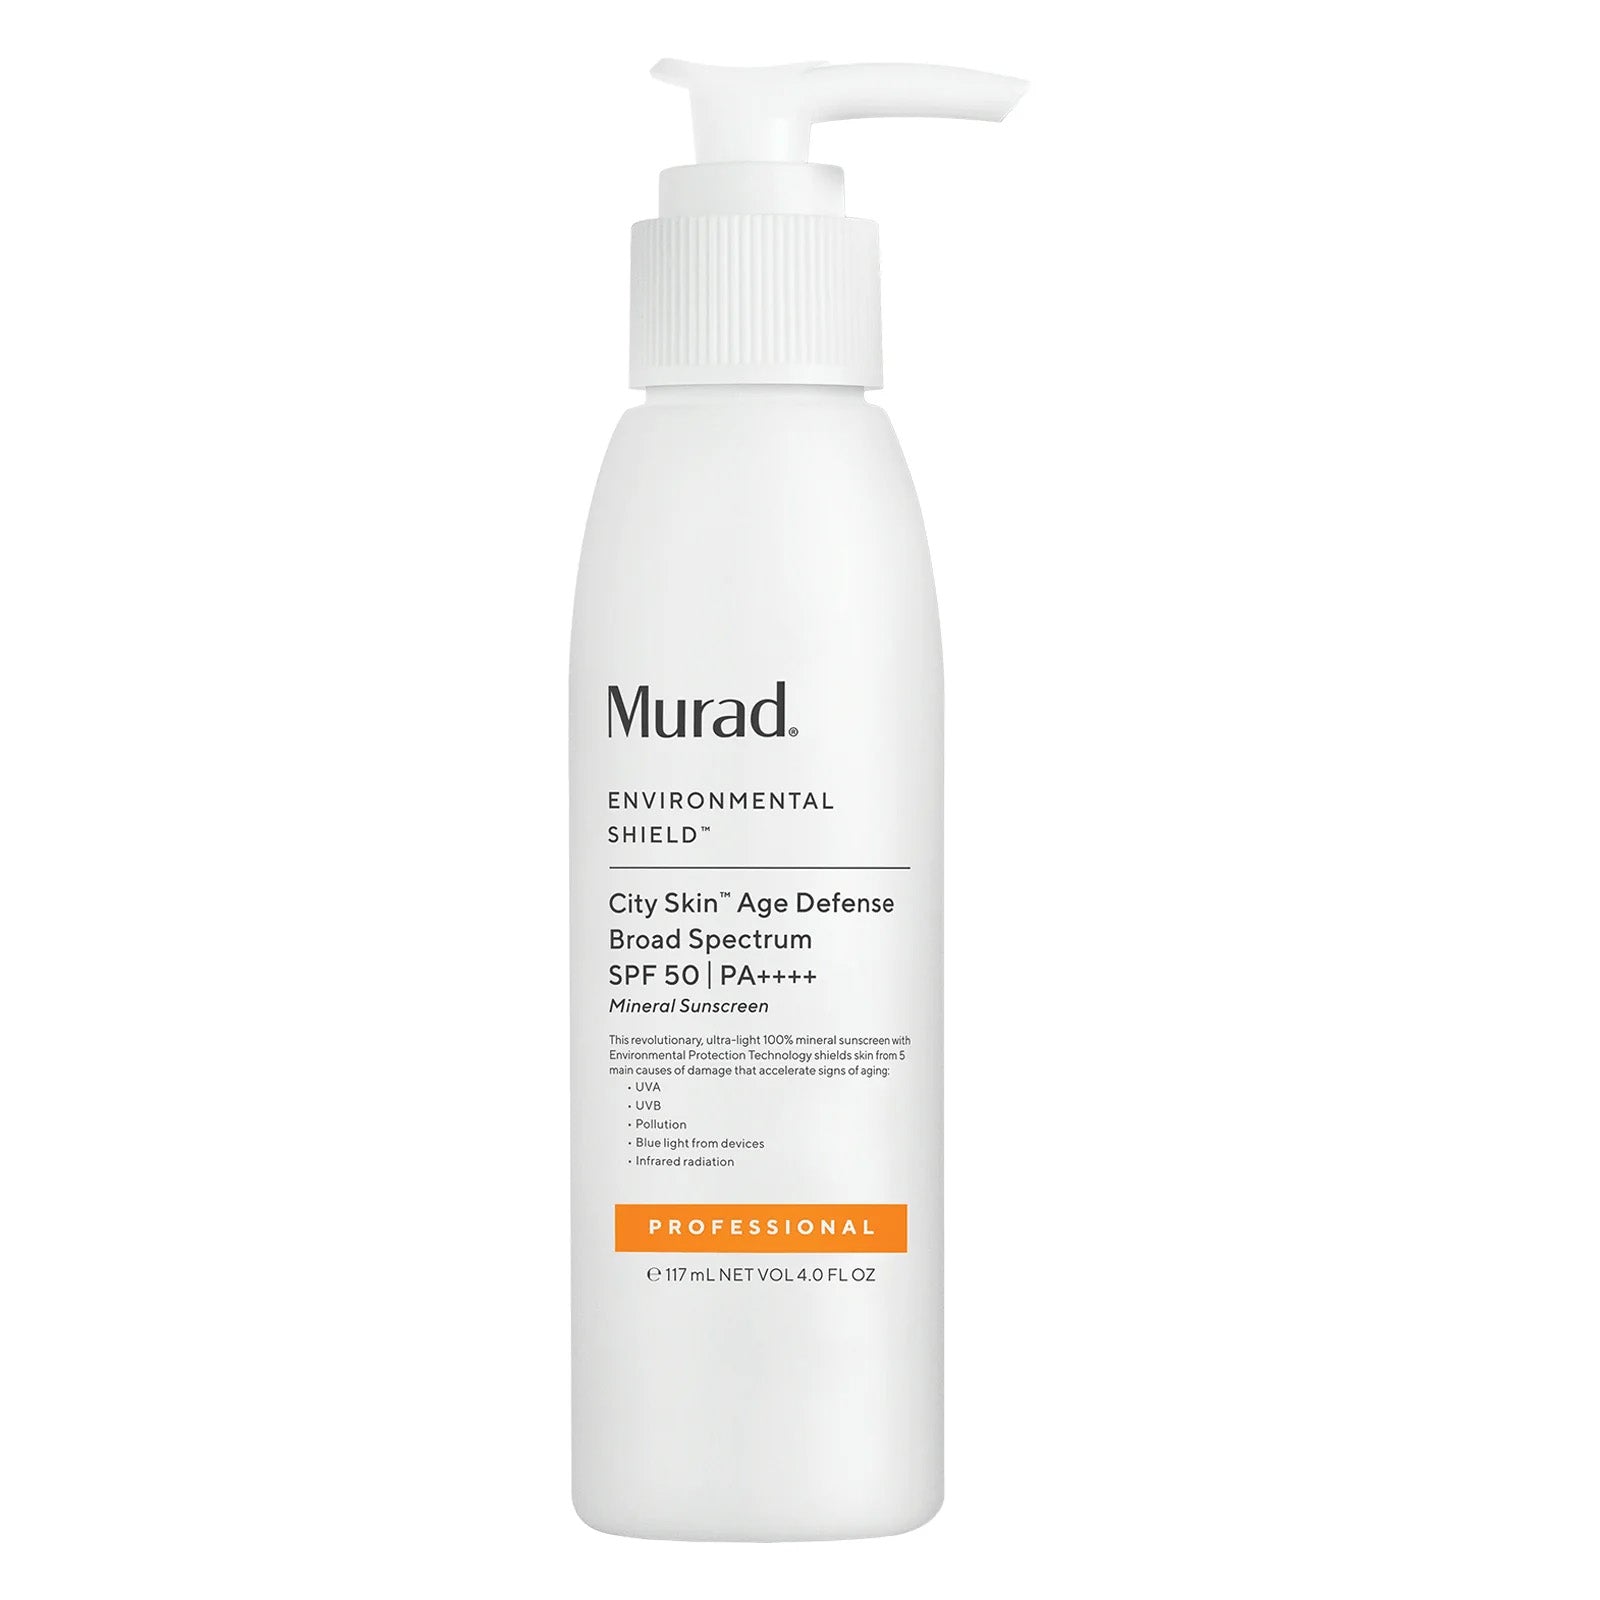 Murad City Skin Age Defense Broad Spectrum SPF 50 / PA++++ Mineral Sunscreen 4 oz / 117ml